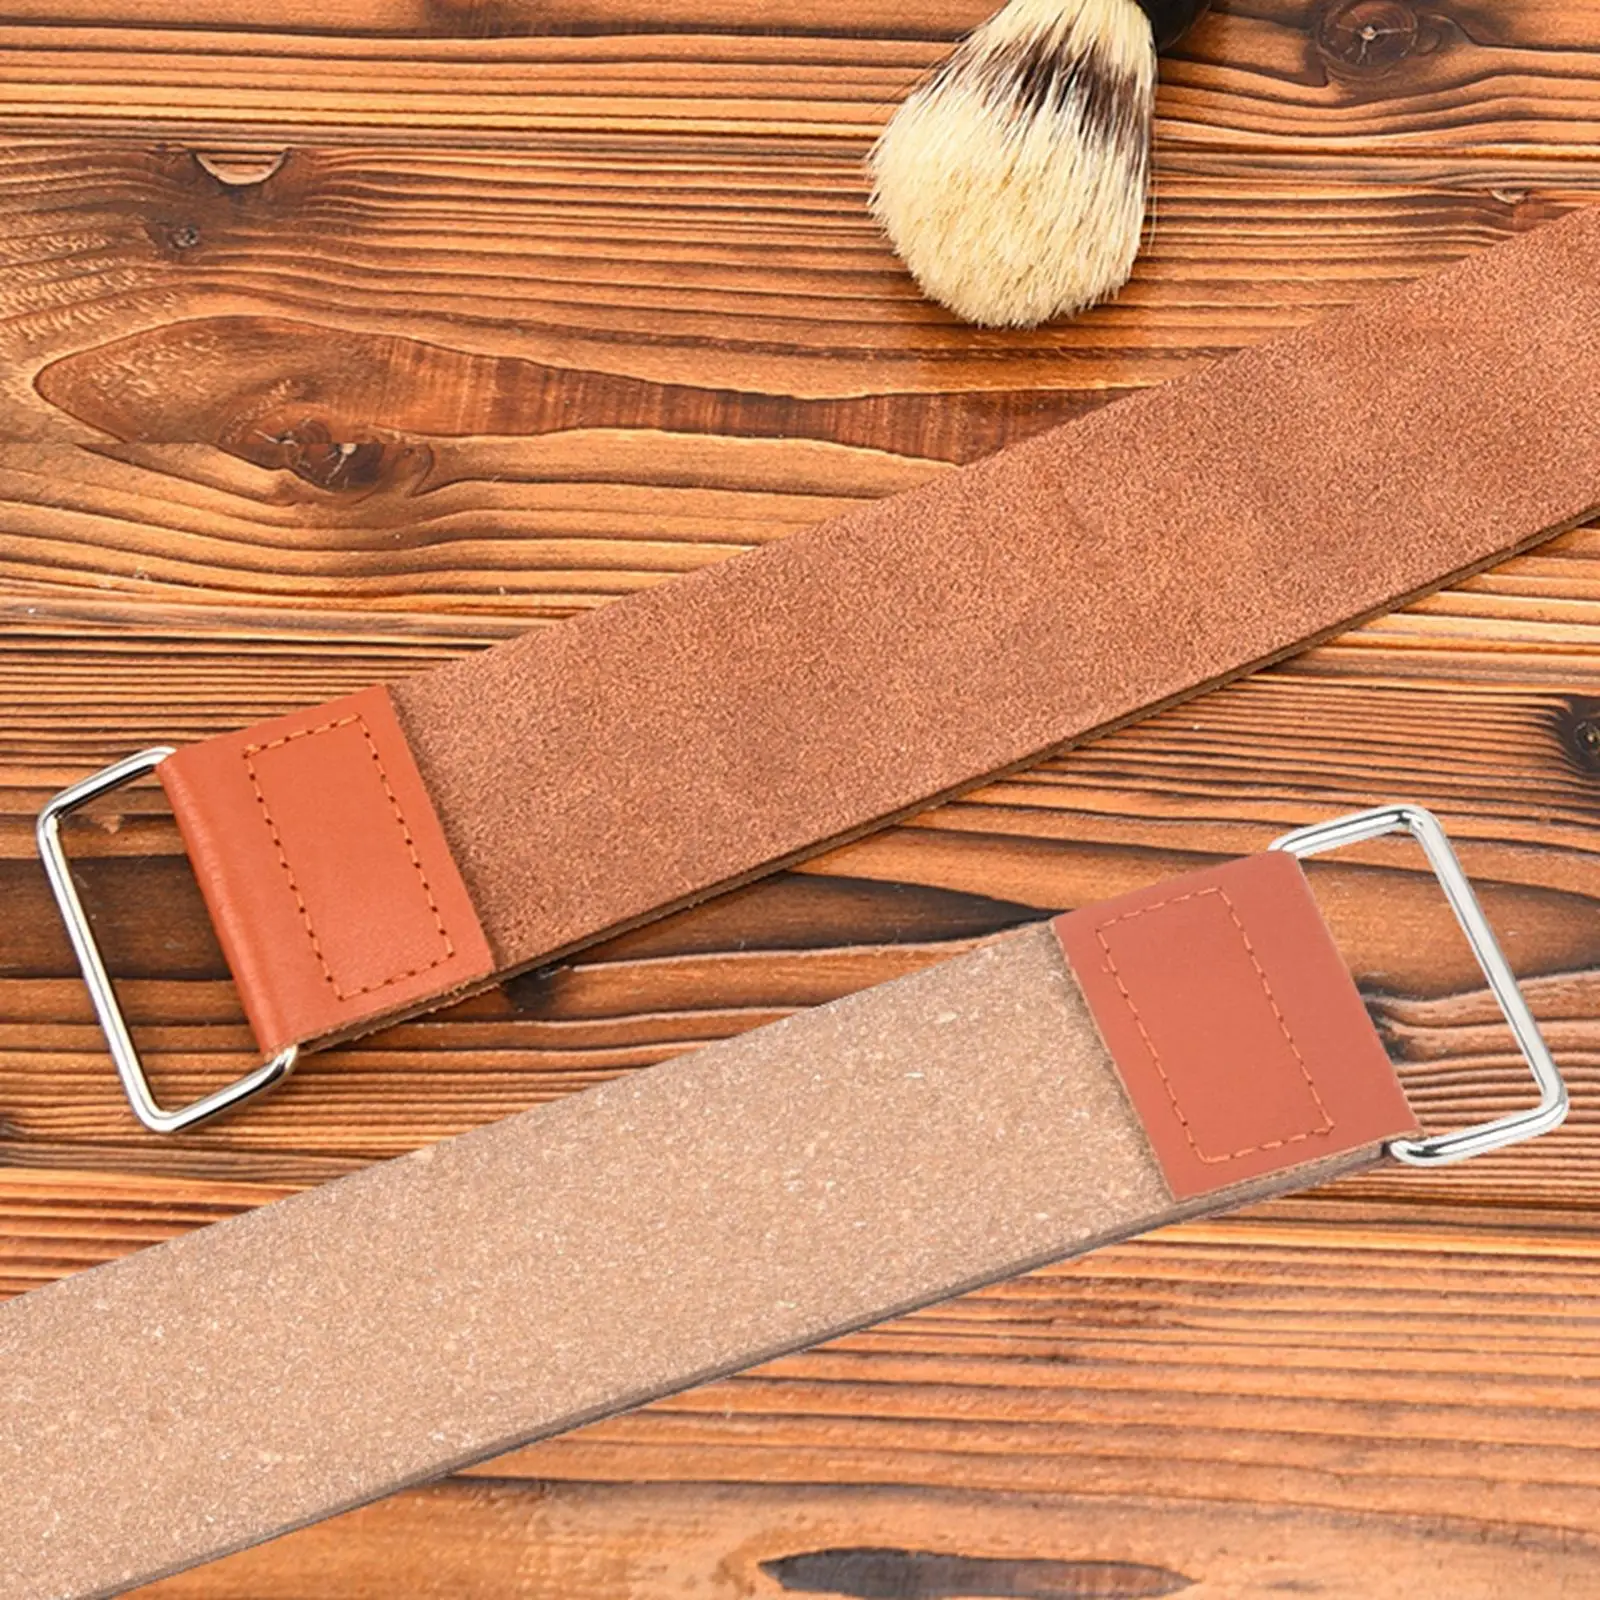 Shaving Strop Shaver, Strop Sharpening Tool with Hanging Hook, Compact Sharpening Belt PU Leather for Salon Travel Barber